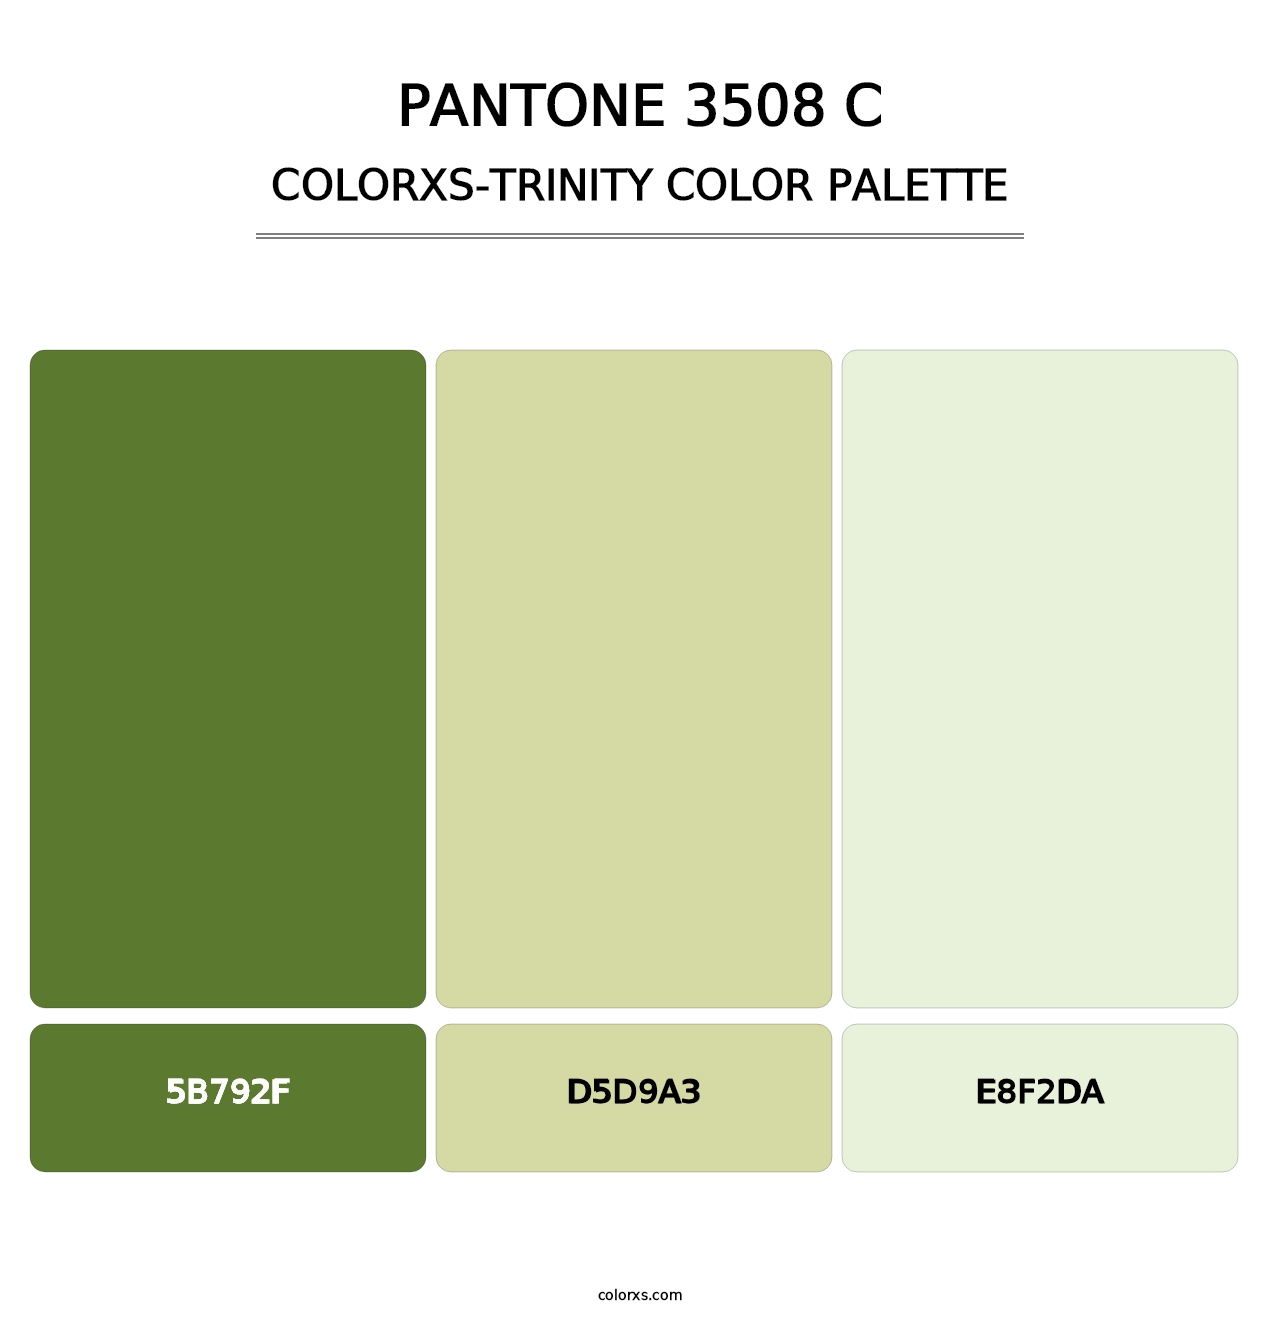 PANTONE 3508 C - Colorxs Trinity Palette